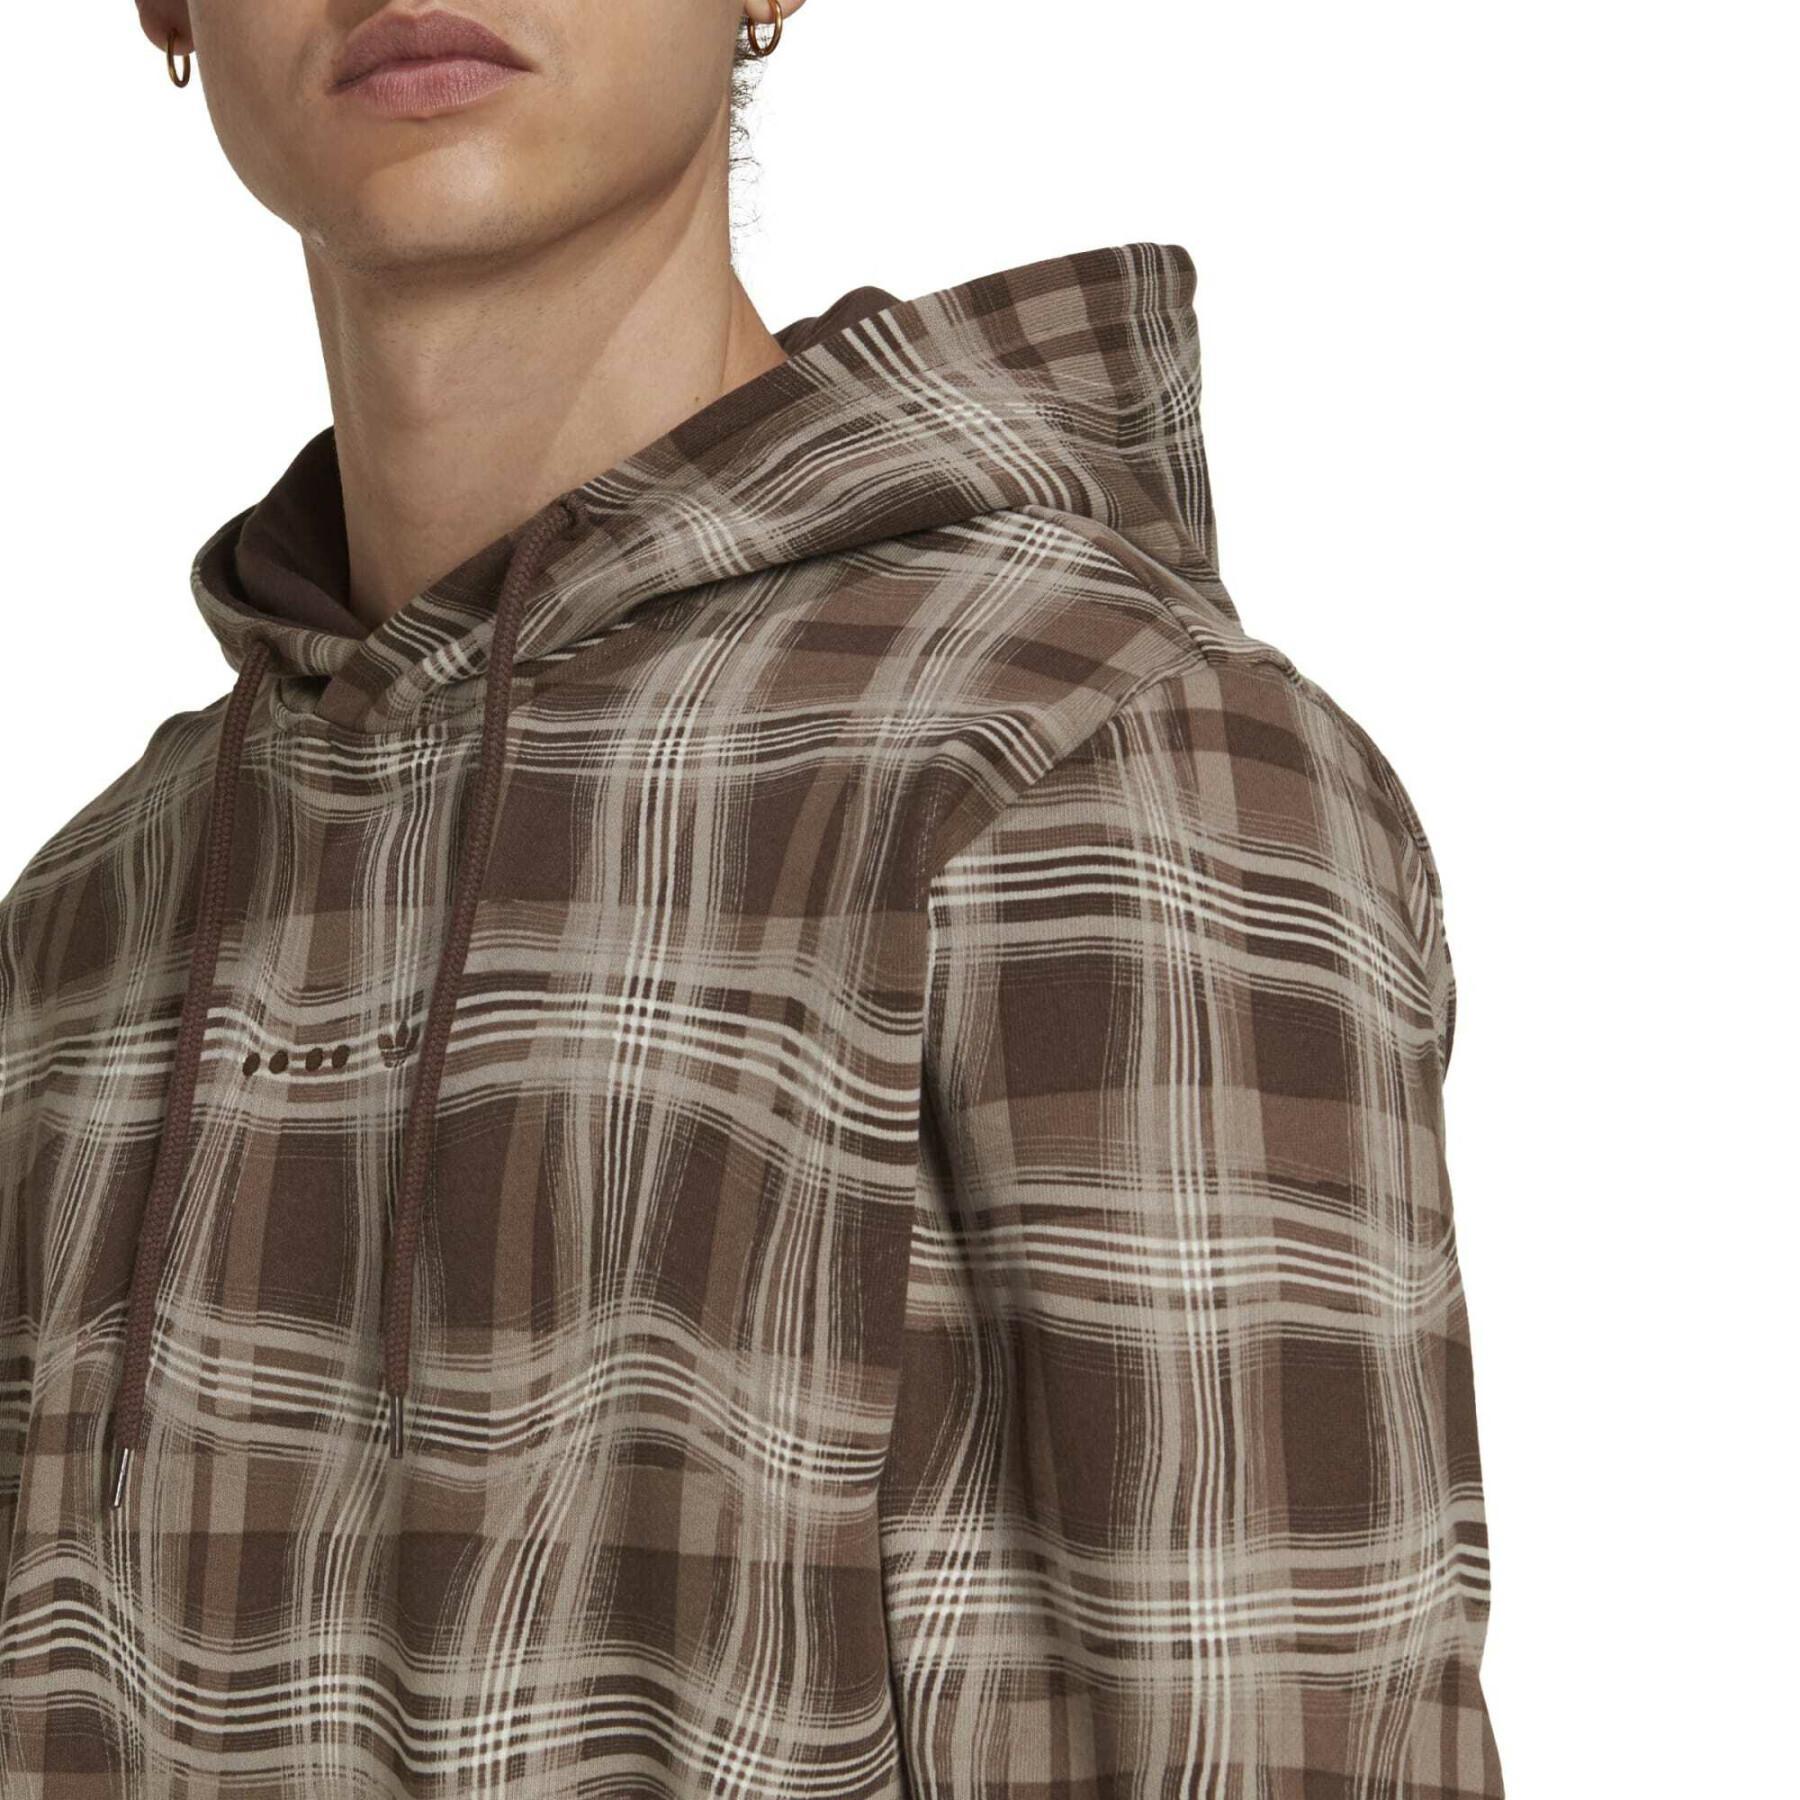 Hooded sweatshirt with integral print adidas Originals Reveal Graphic